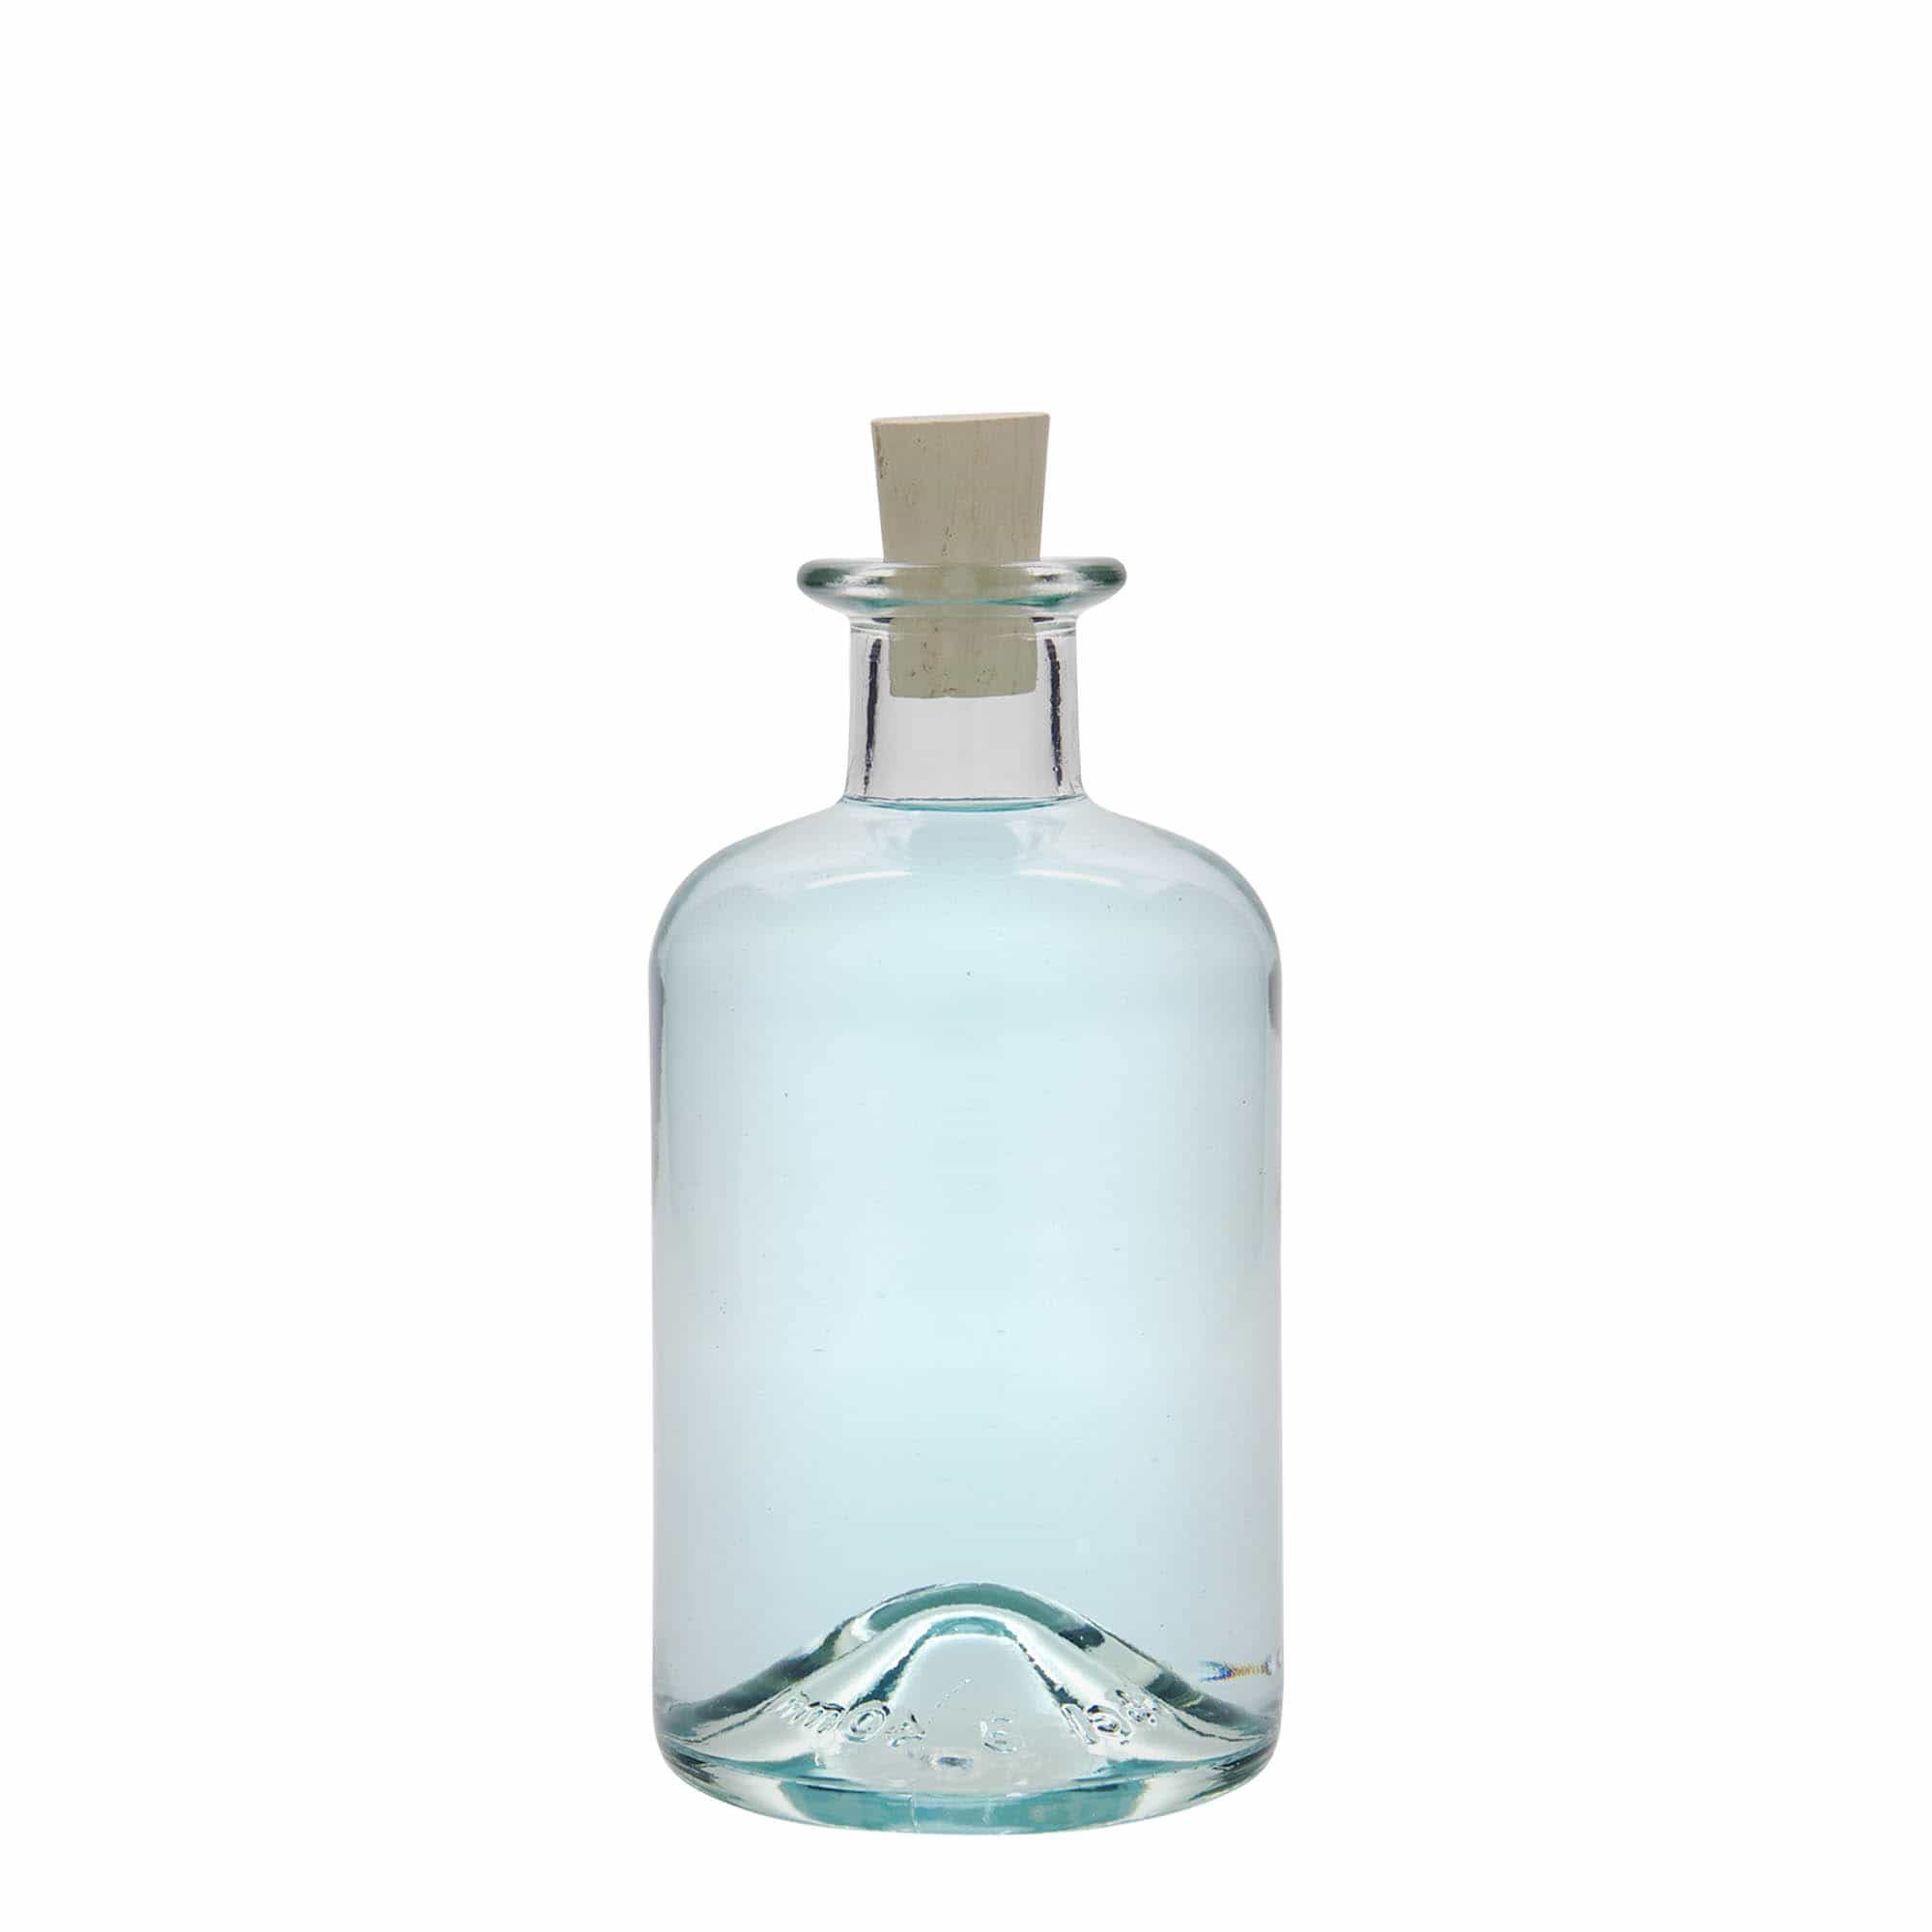 350 ml glass apothecary bottle, closure: cork